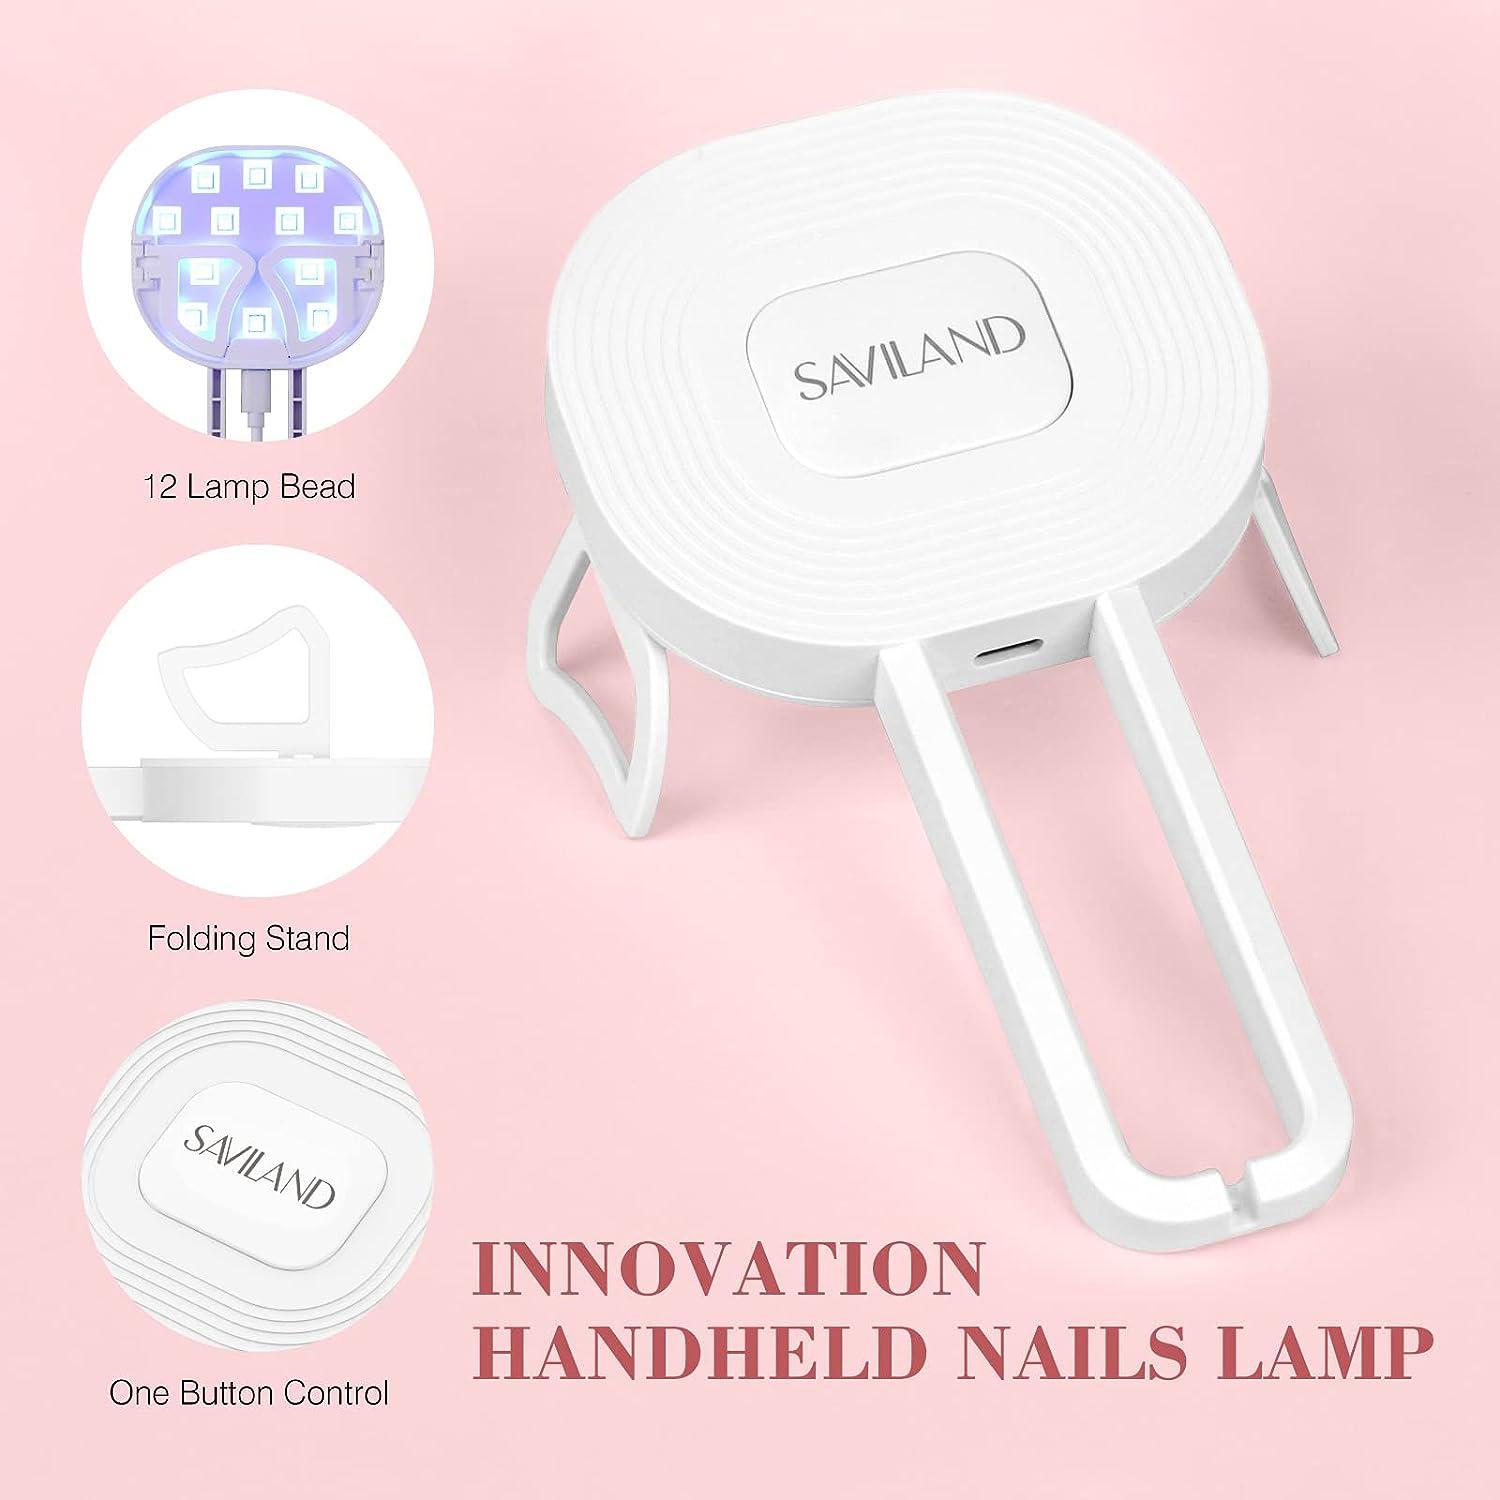 Saviland 4 in 1 Nail Glue Gel Portable U V Light Nails Kit - Temu